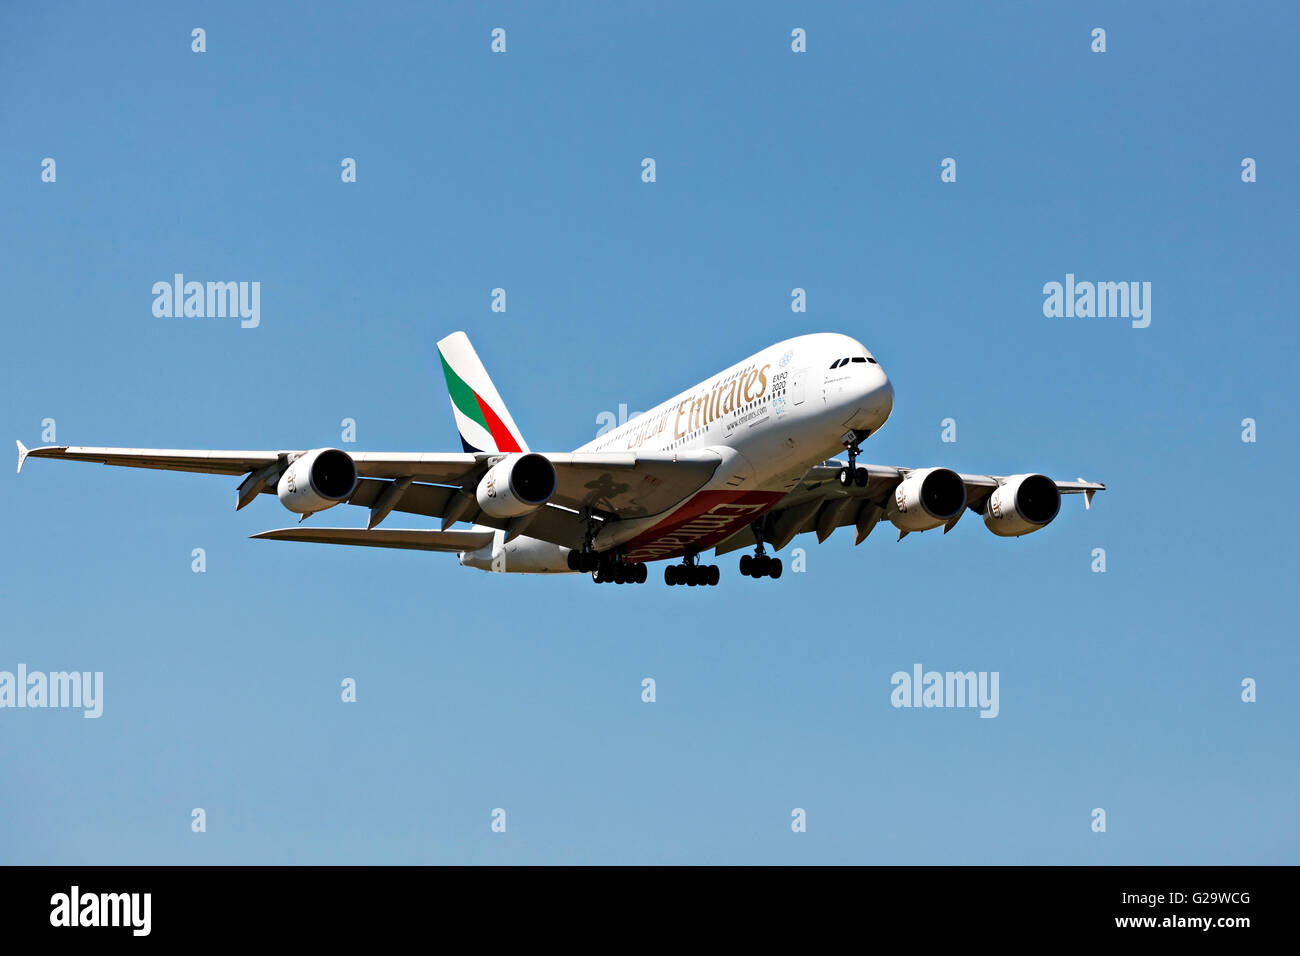 Emirates Airbus A380-800 passenger aircraft, on landing approach to  Franz Josef Strauss Airport, Munich, Upper Bavaria, Germany Stock Photo